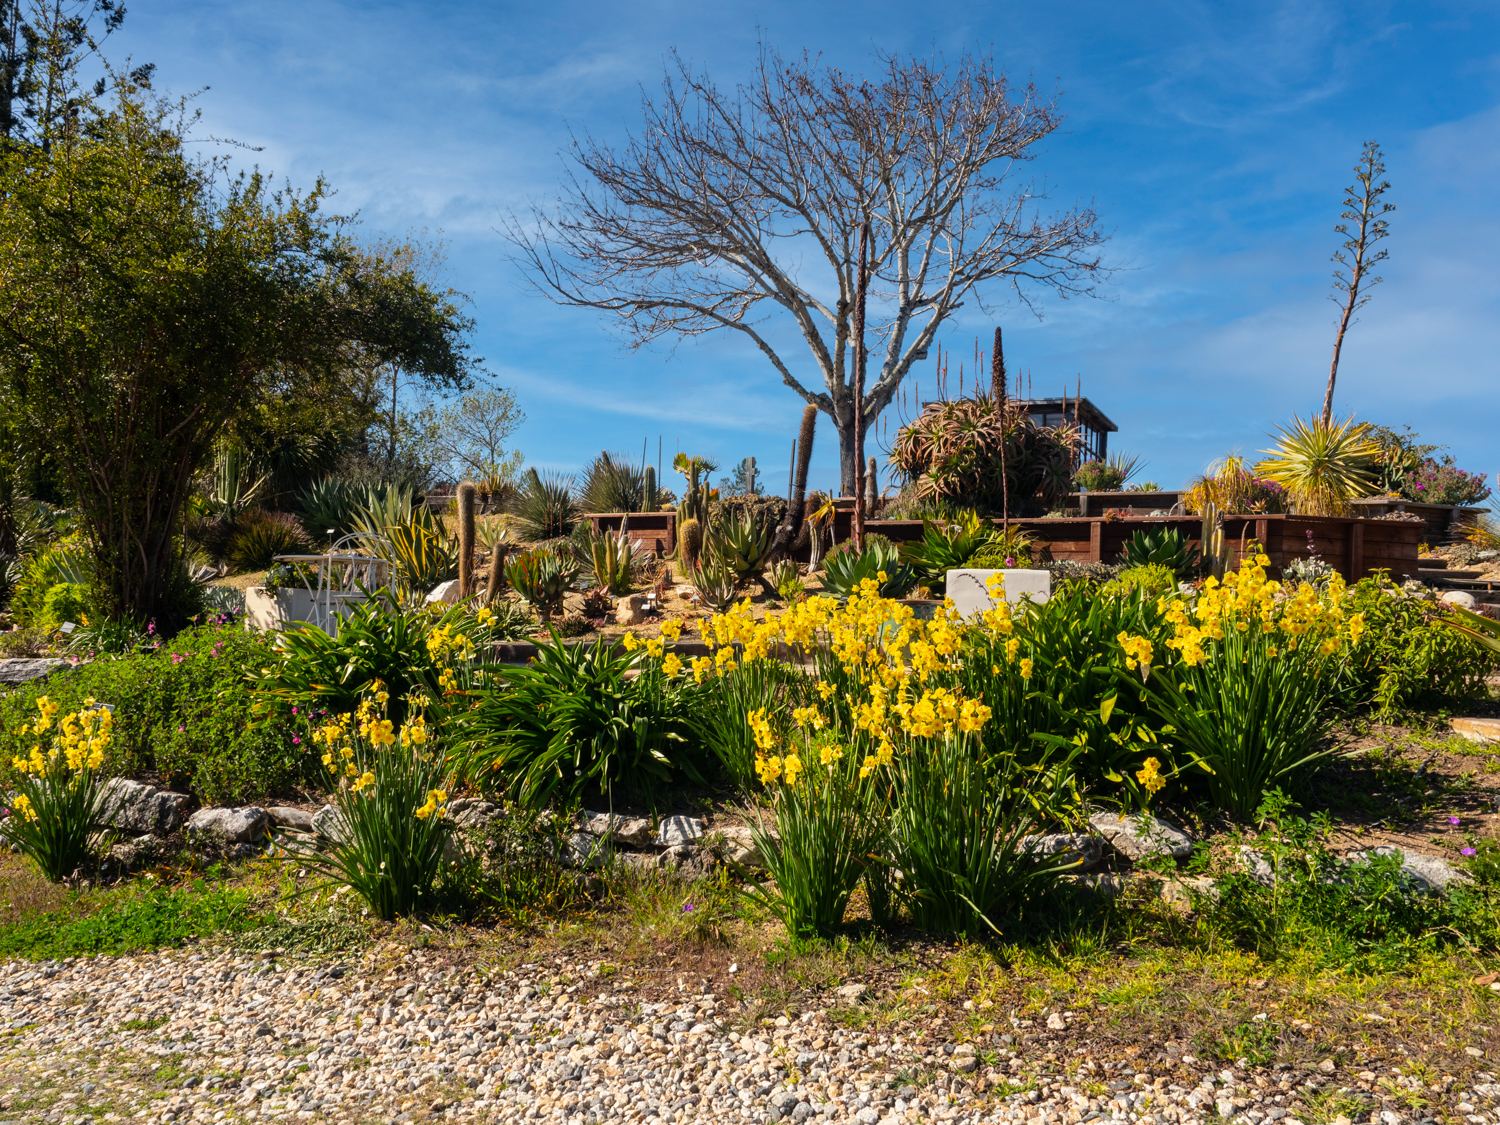 UC Santa Cruz Arboretum & Botanic Garden